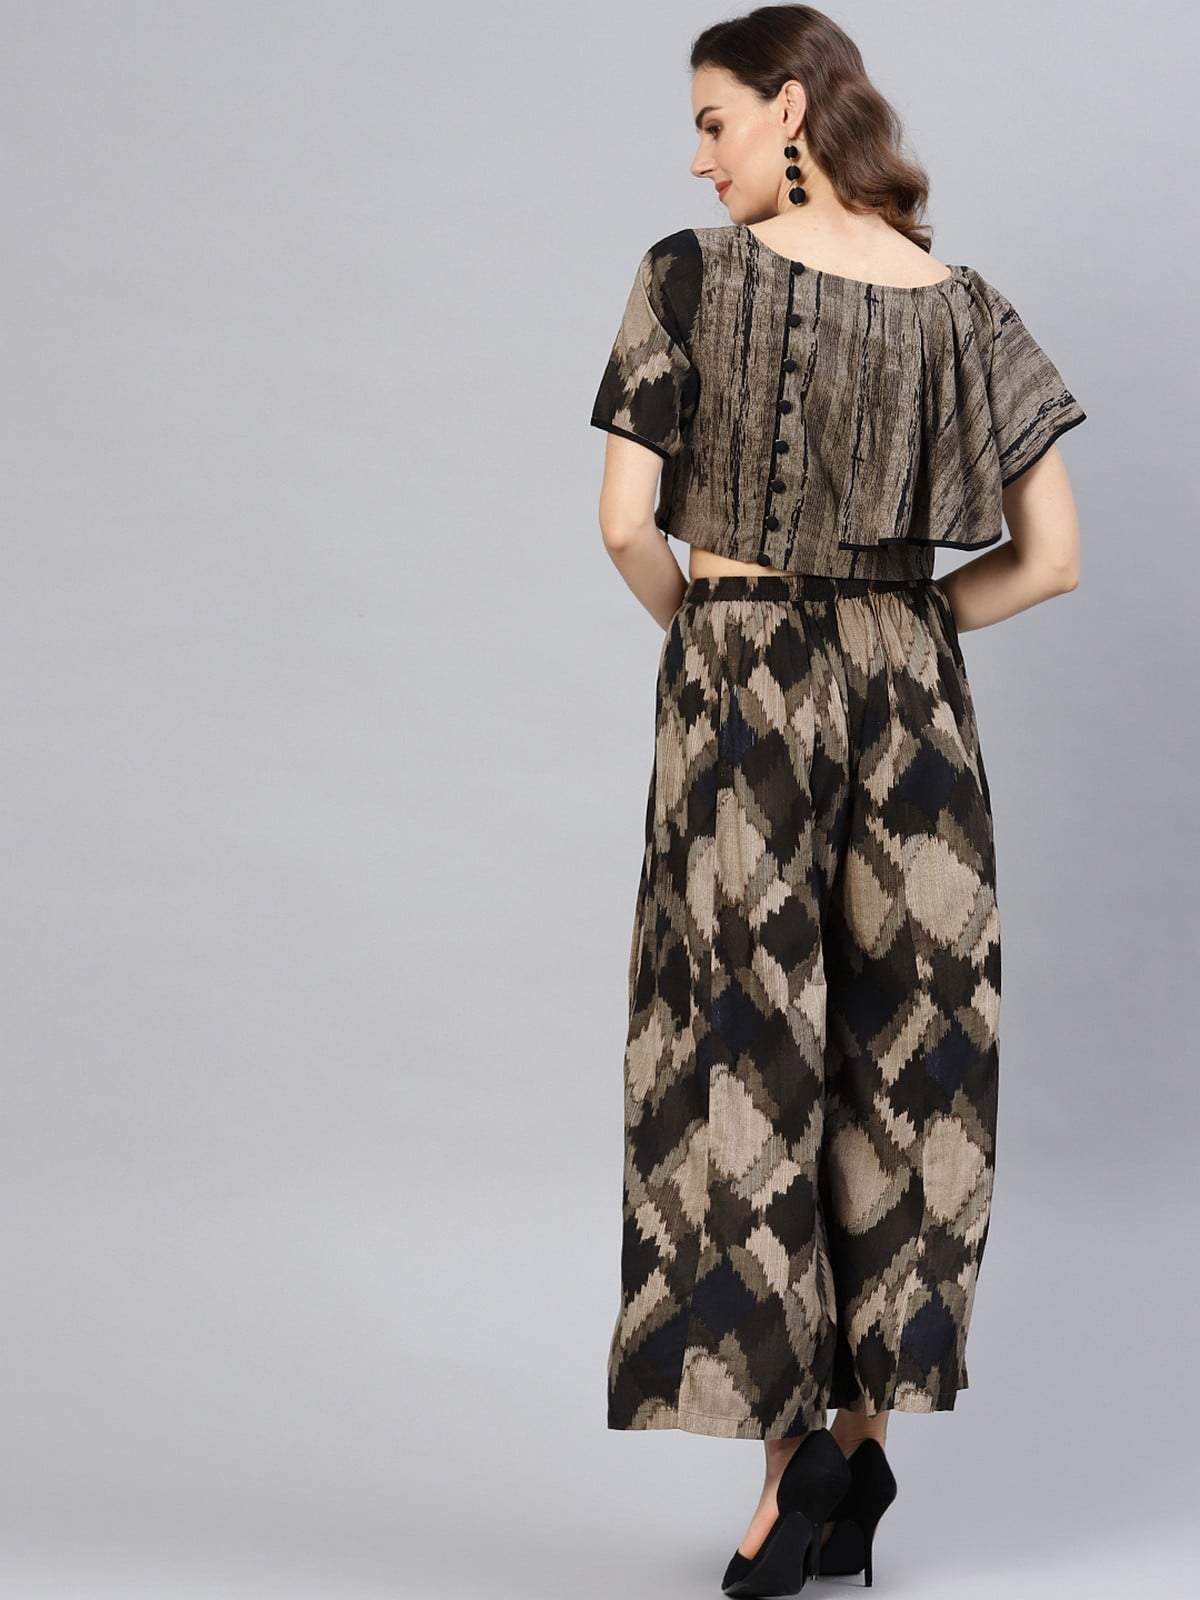 Women's Block Printed Asymmetric Top With Skirt - Pannkh